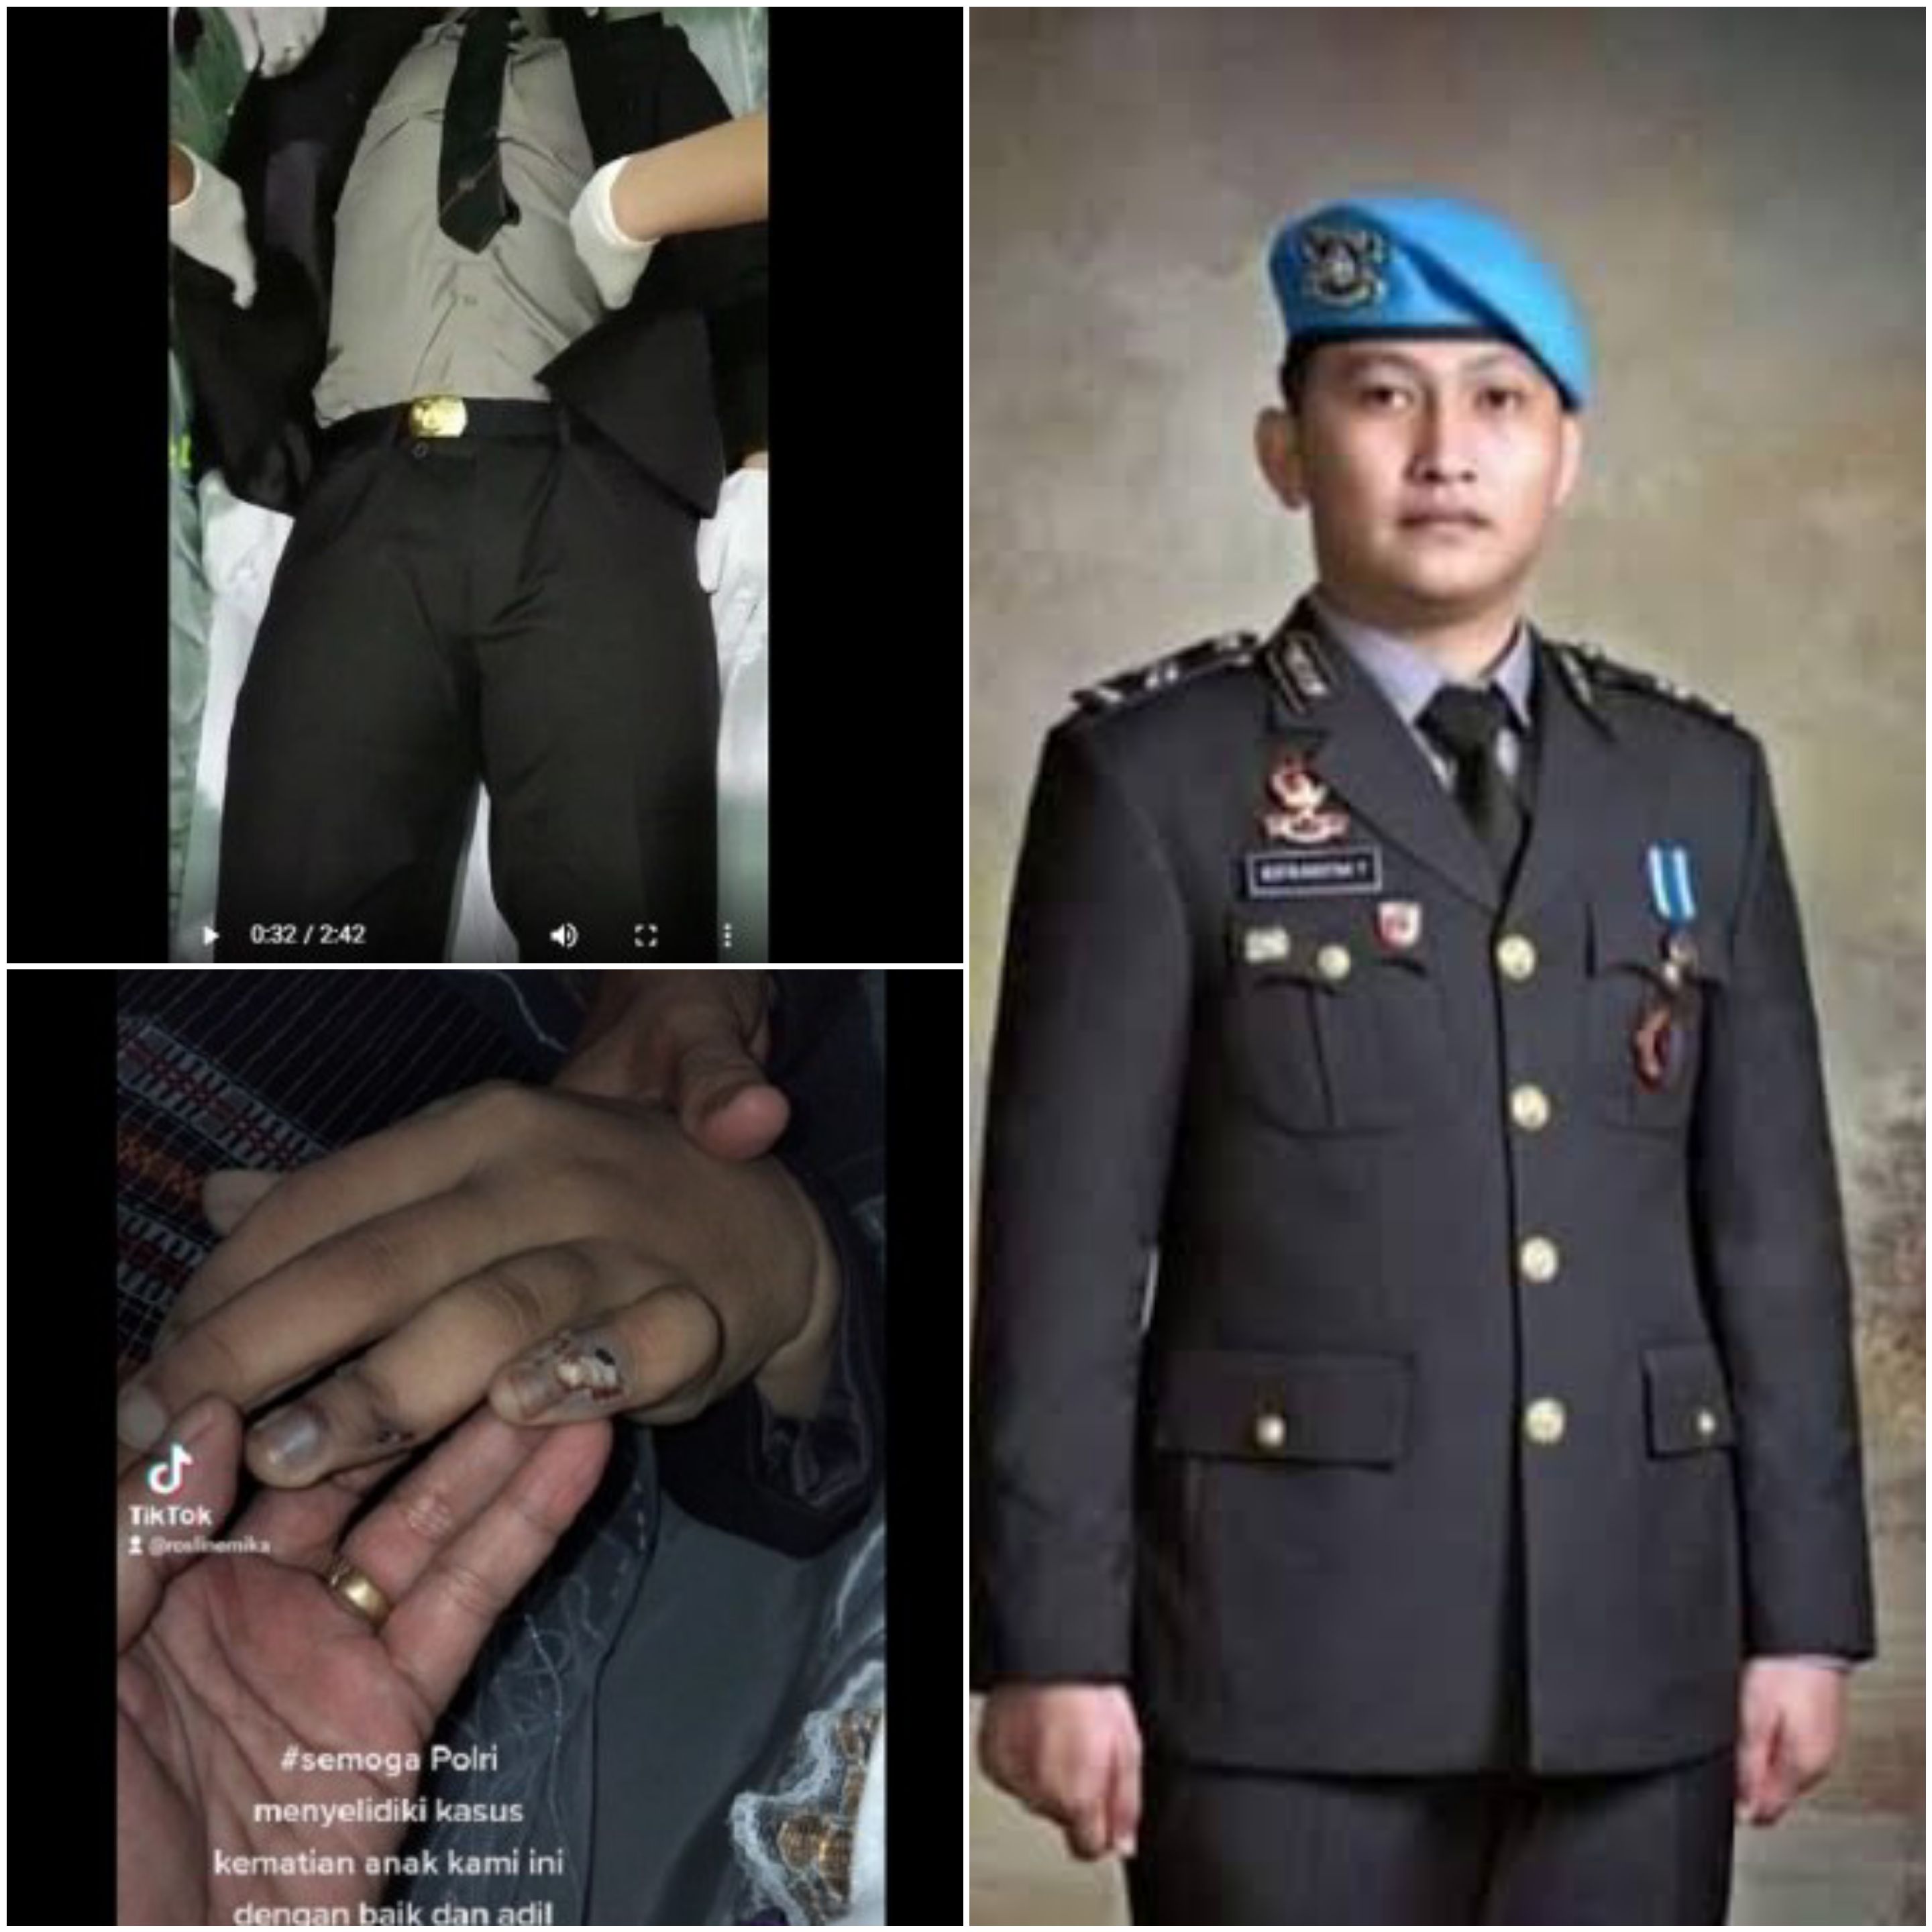 Autopsi Ulang Jenazah Brigadir Joshua Libatkan Dokter F dari RSPAD, Jenderal Andika: Dipilih